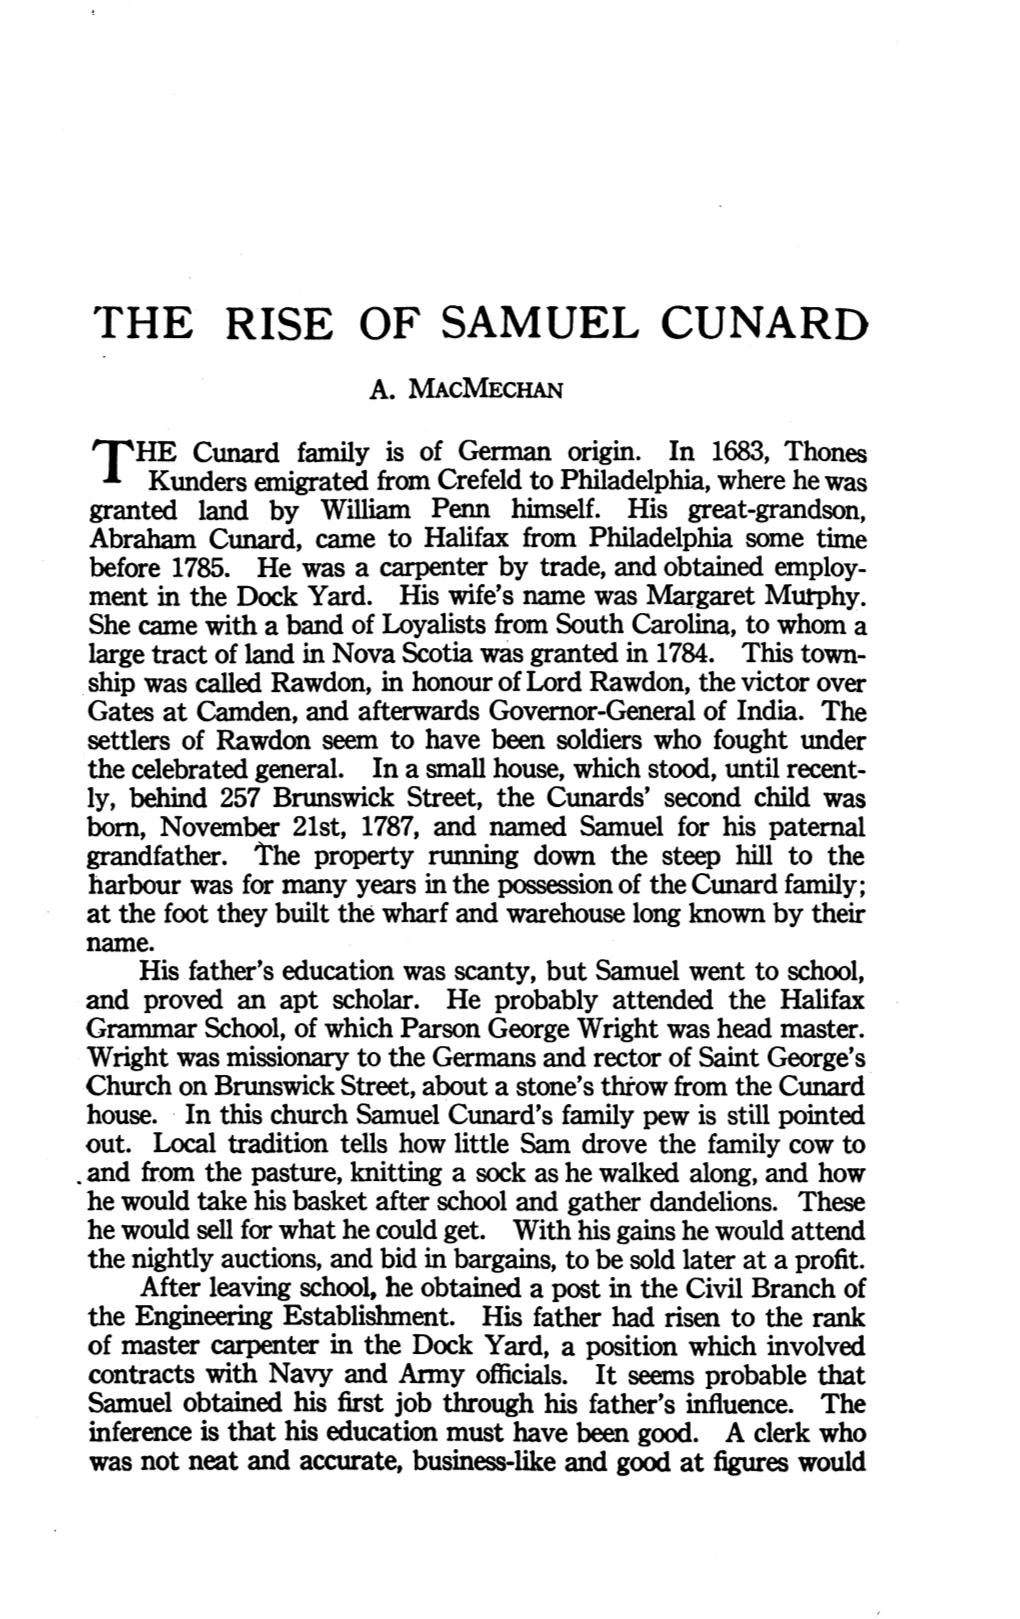 The Rise of Samuel Cunard